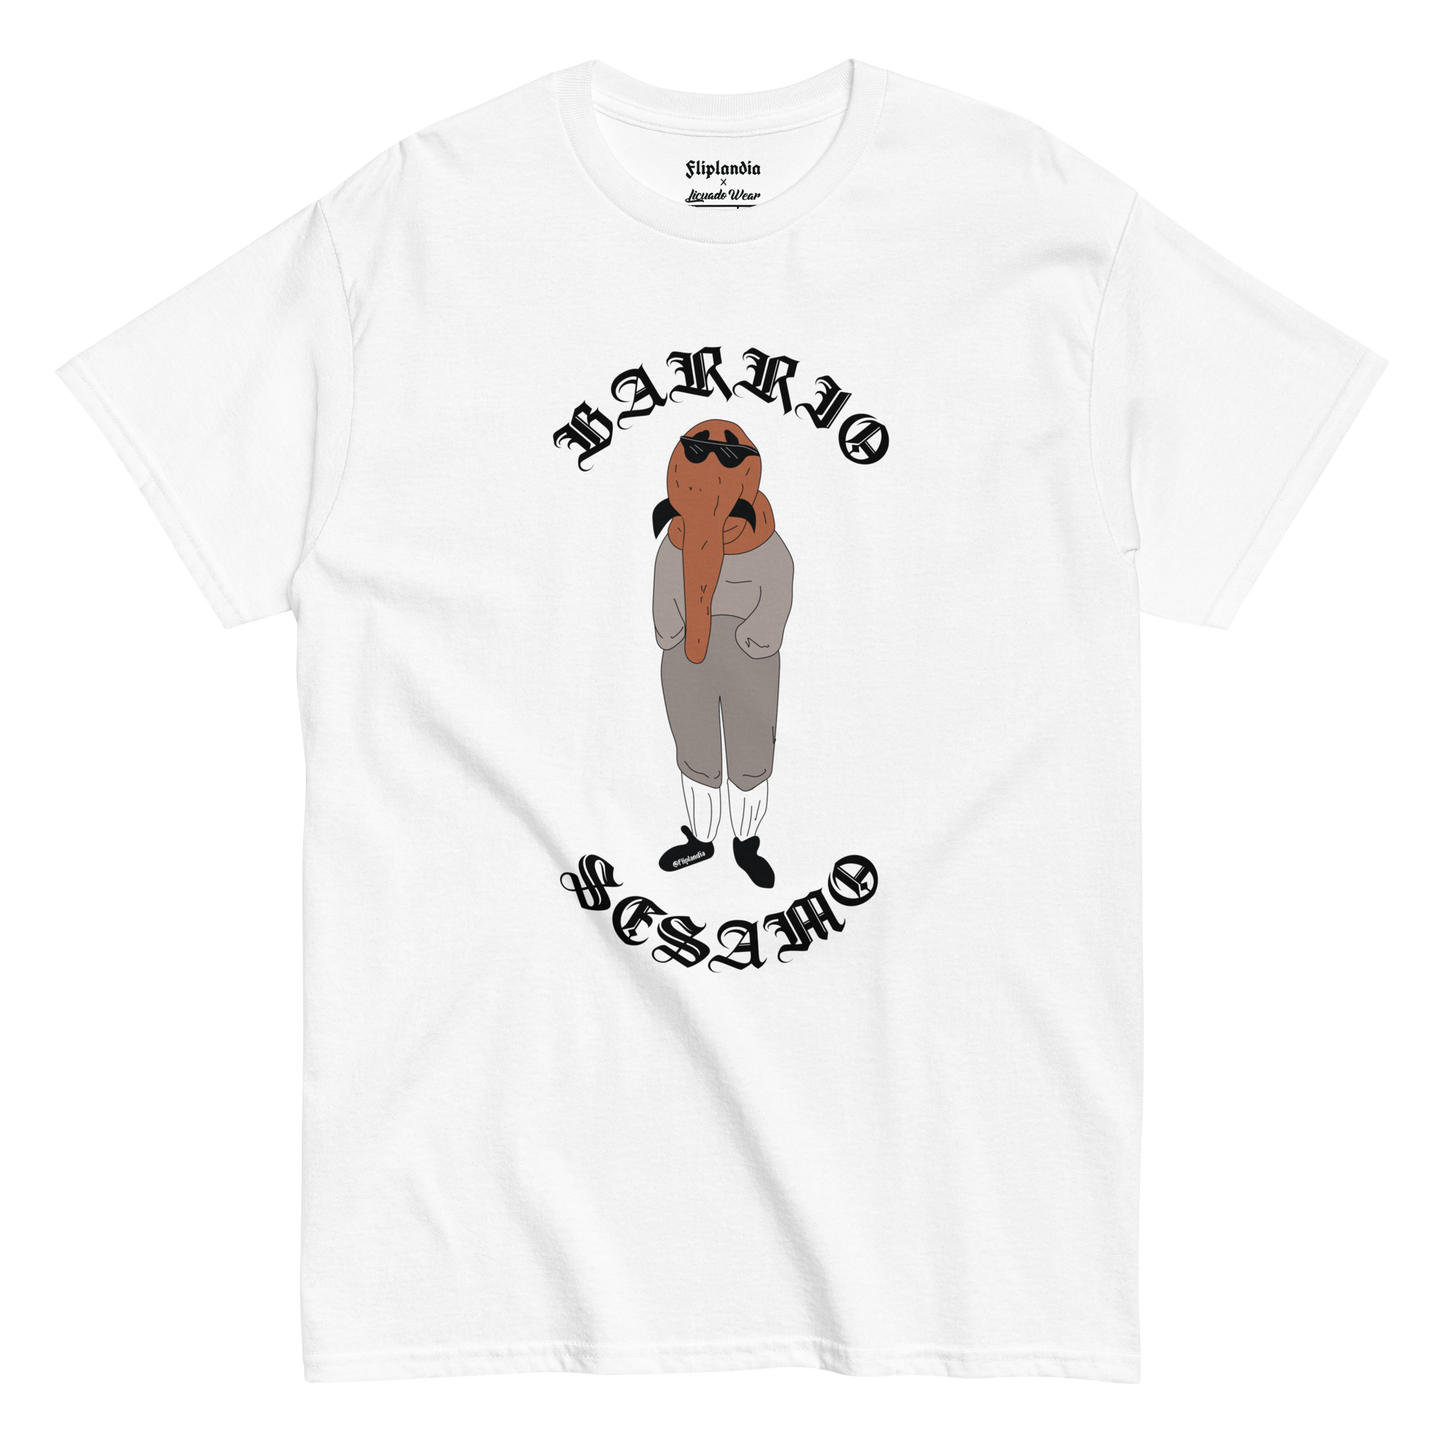 Tronkas - Fliplandia Unisex T-shirt